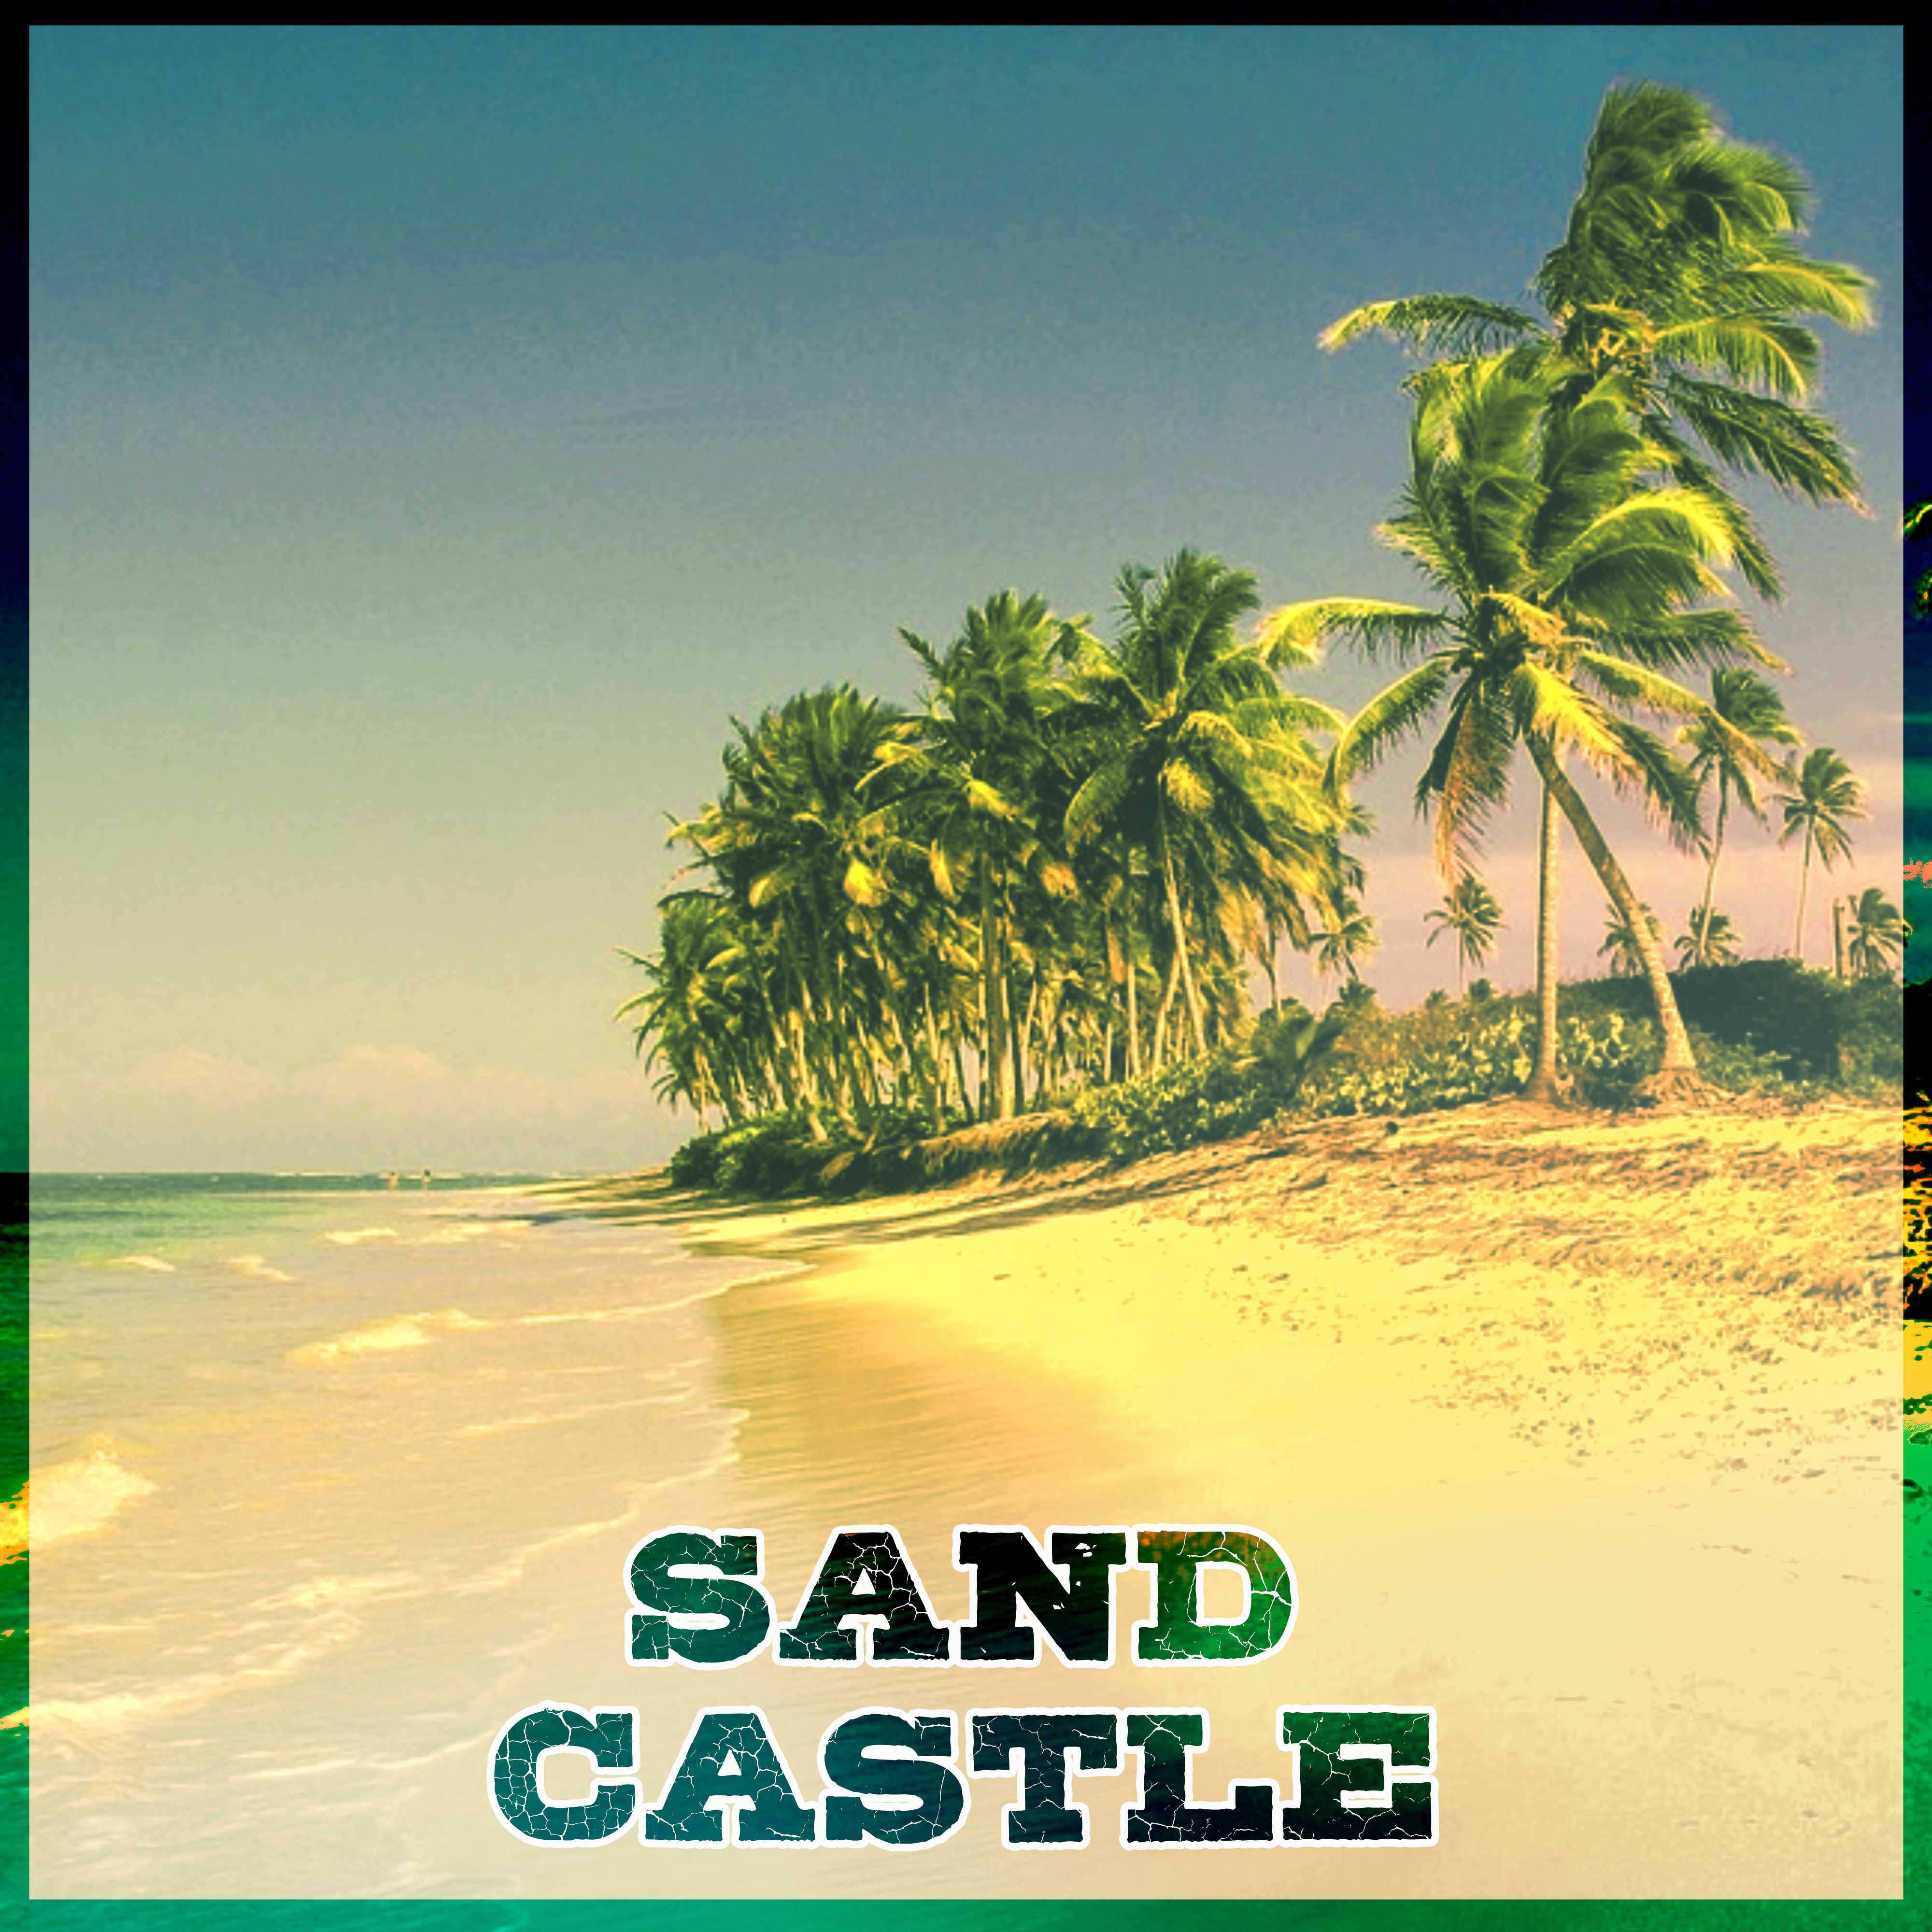 Sand Castle - Children's Fun, Nice Time, Months Holiday, Walks Bank, Rhythmic Sounds